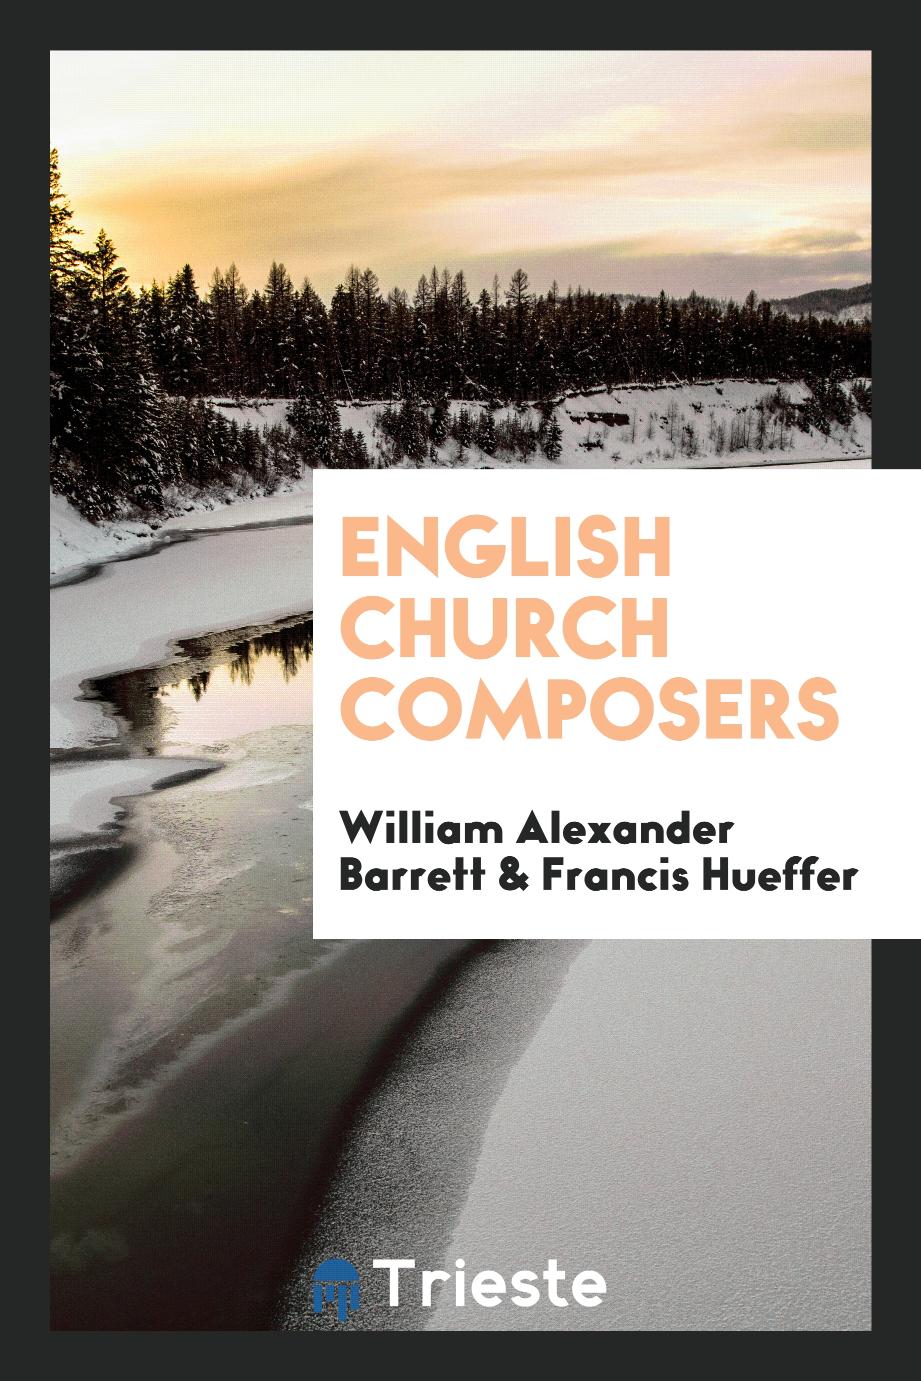 English church composers